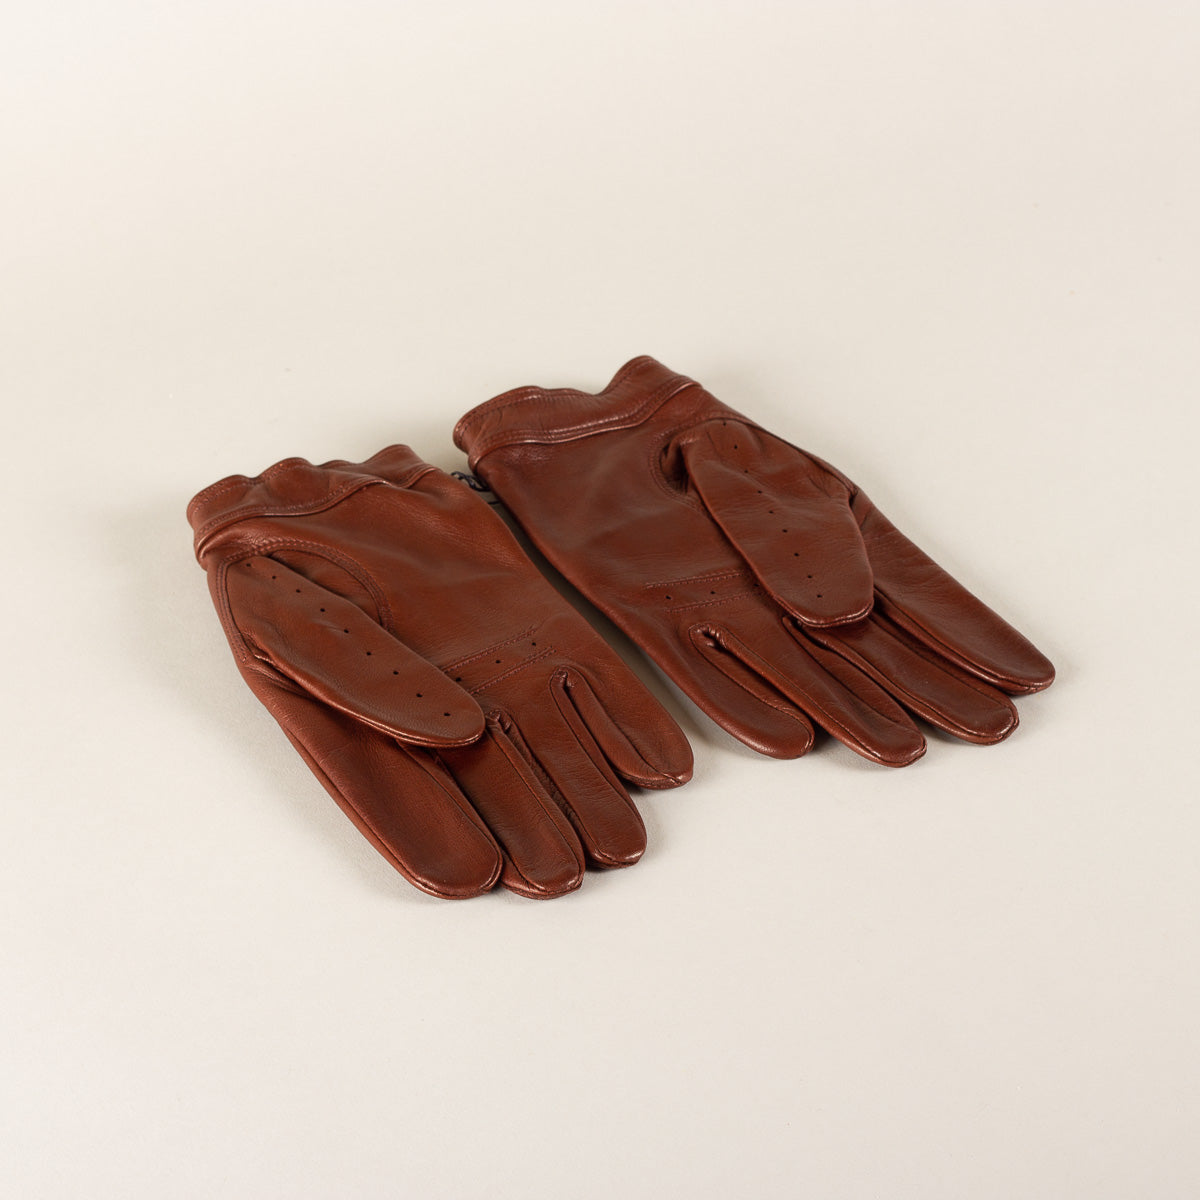 HESTRA Handschoenen Steve - Kastanje bruin